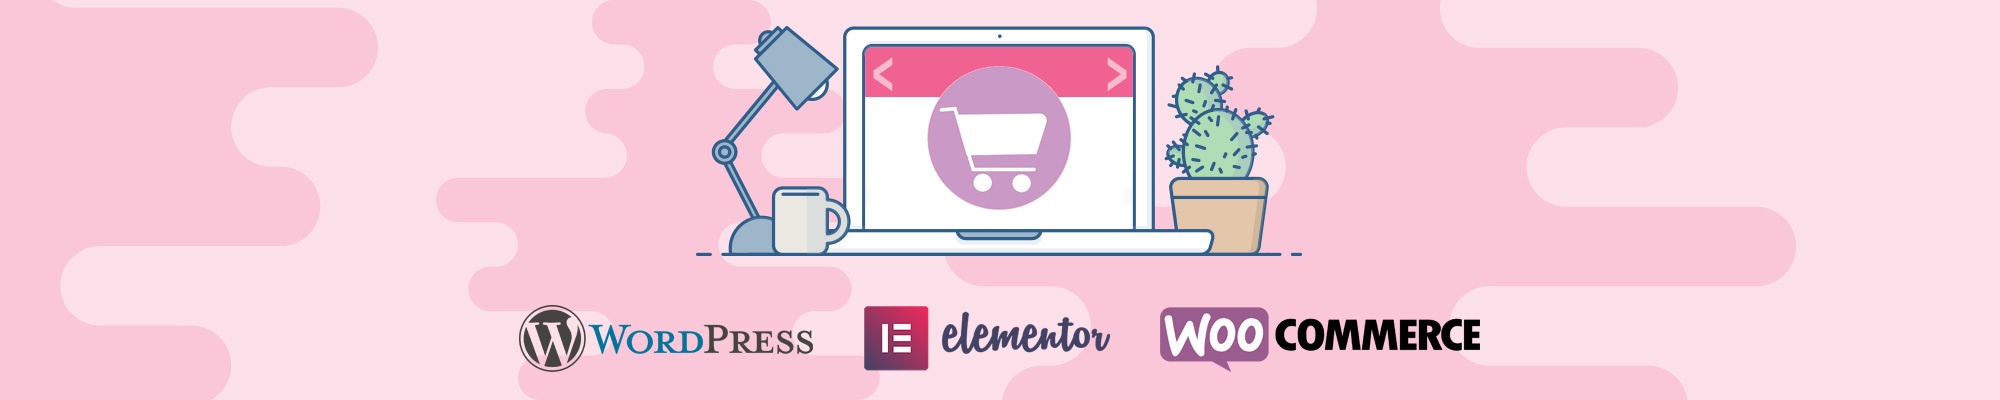 WordPress Webshops mit Elementor Pro & WooCommerce